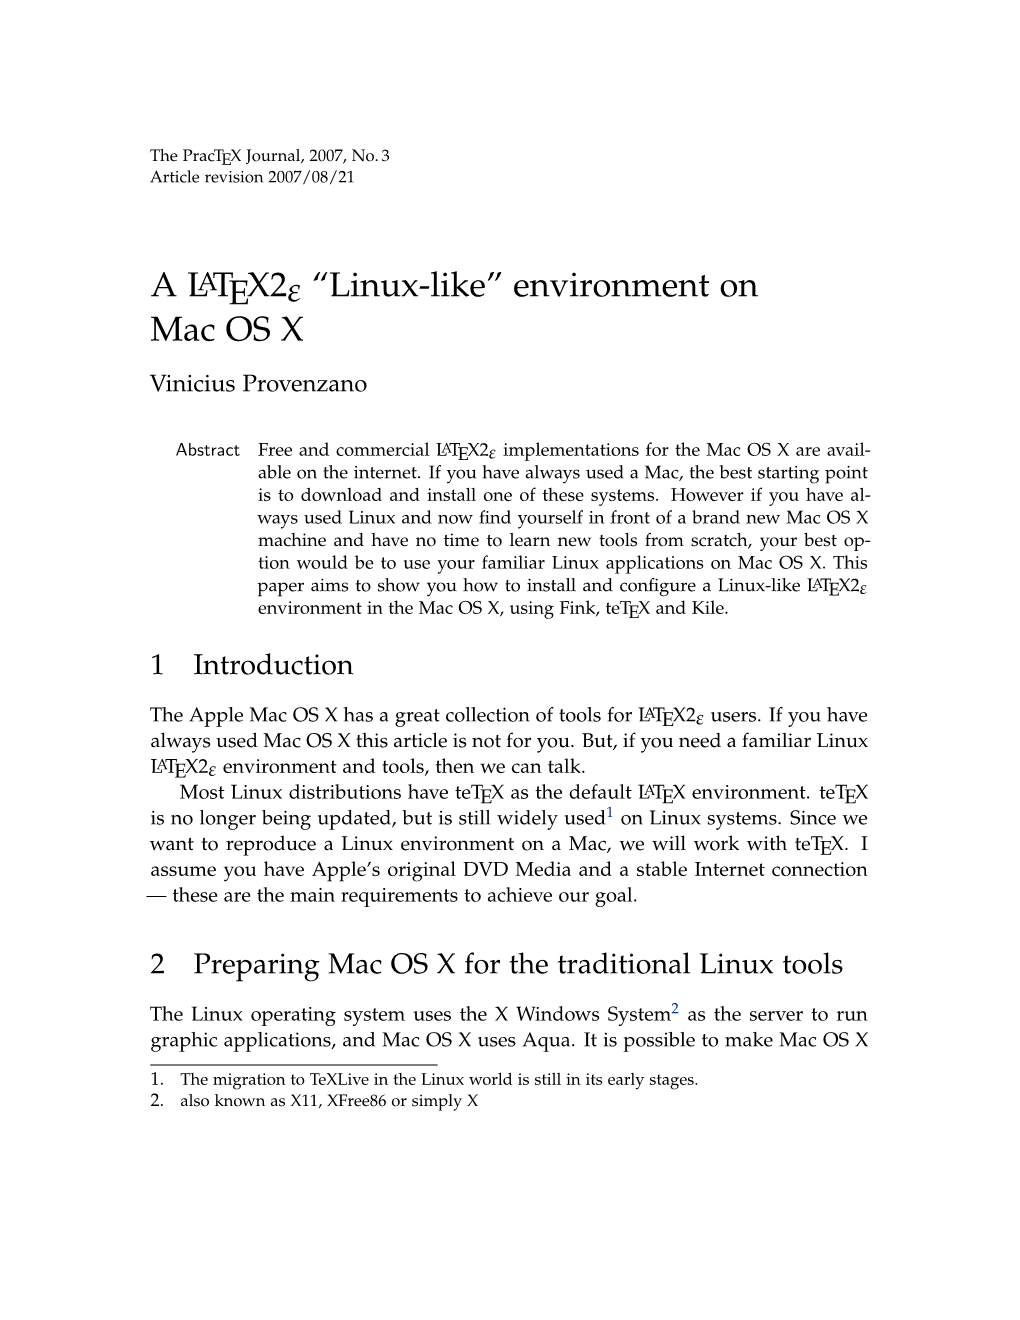 Environment on Mac OS X Vinicius Provenzano